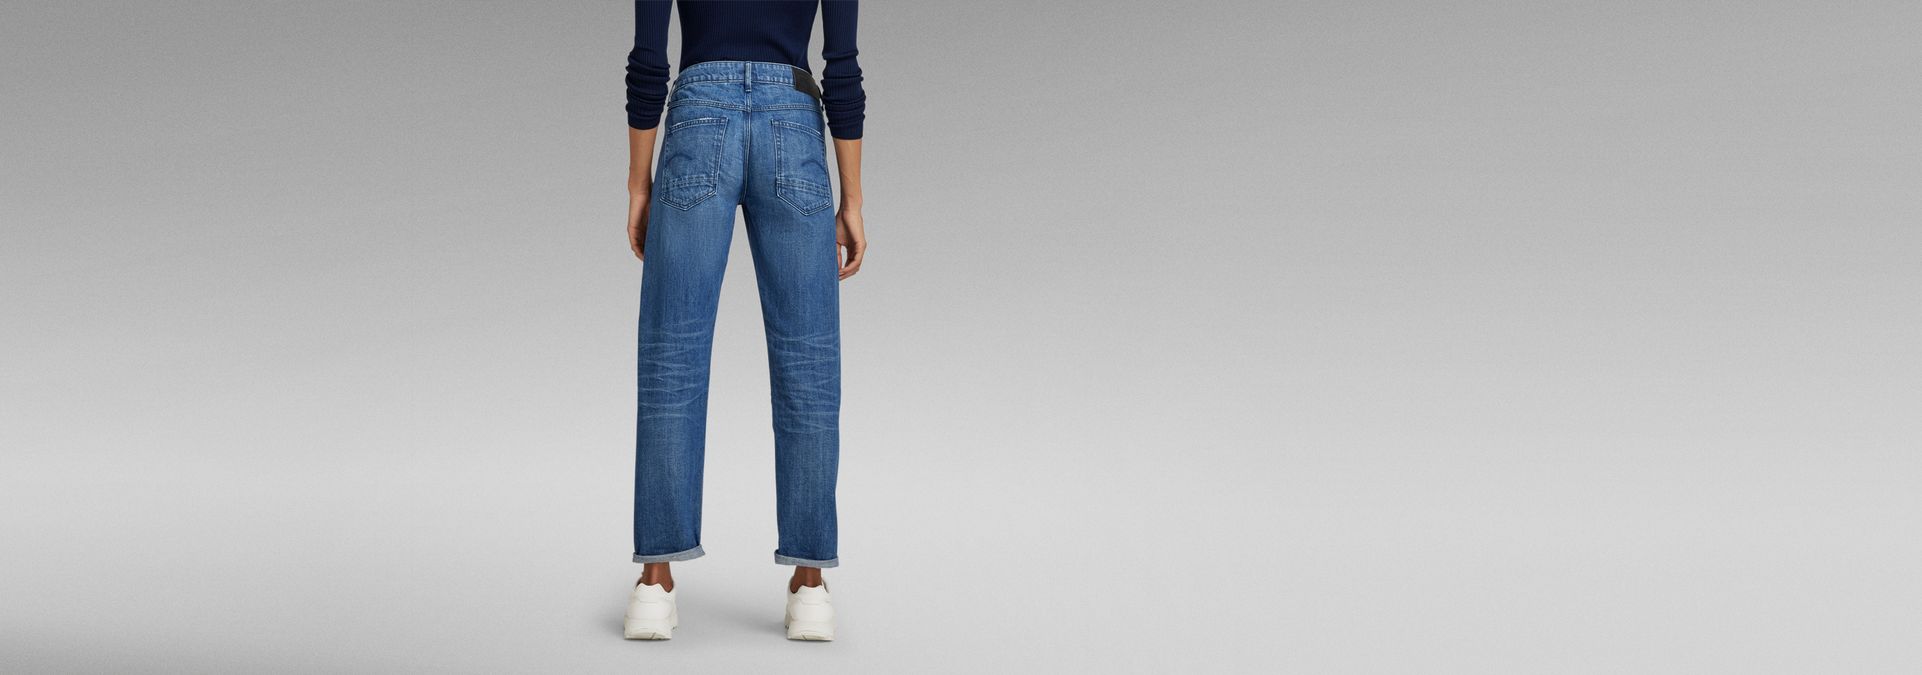 Rabatt 70 % DAMEN Jeans Boyfriend jeans NO STYLE Newplay Boyfriend jeans Blau M 